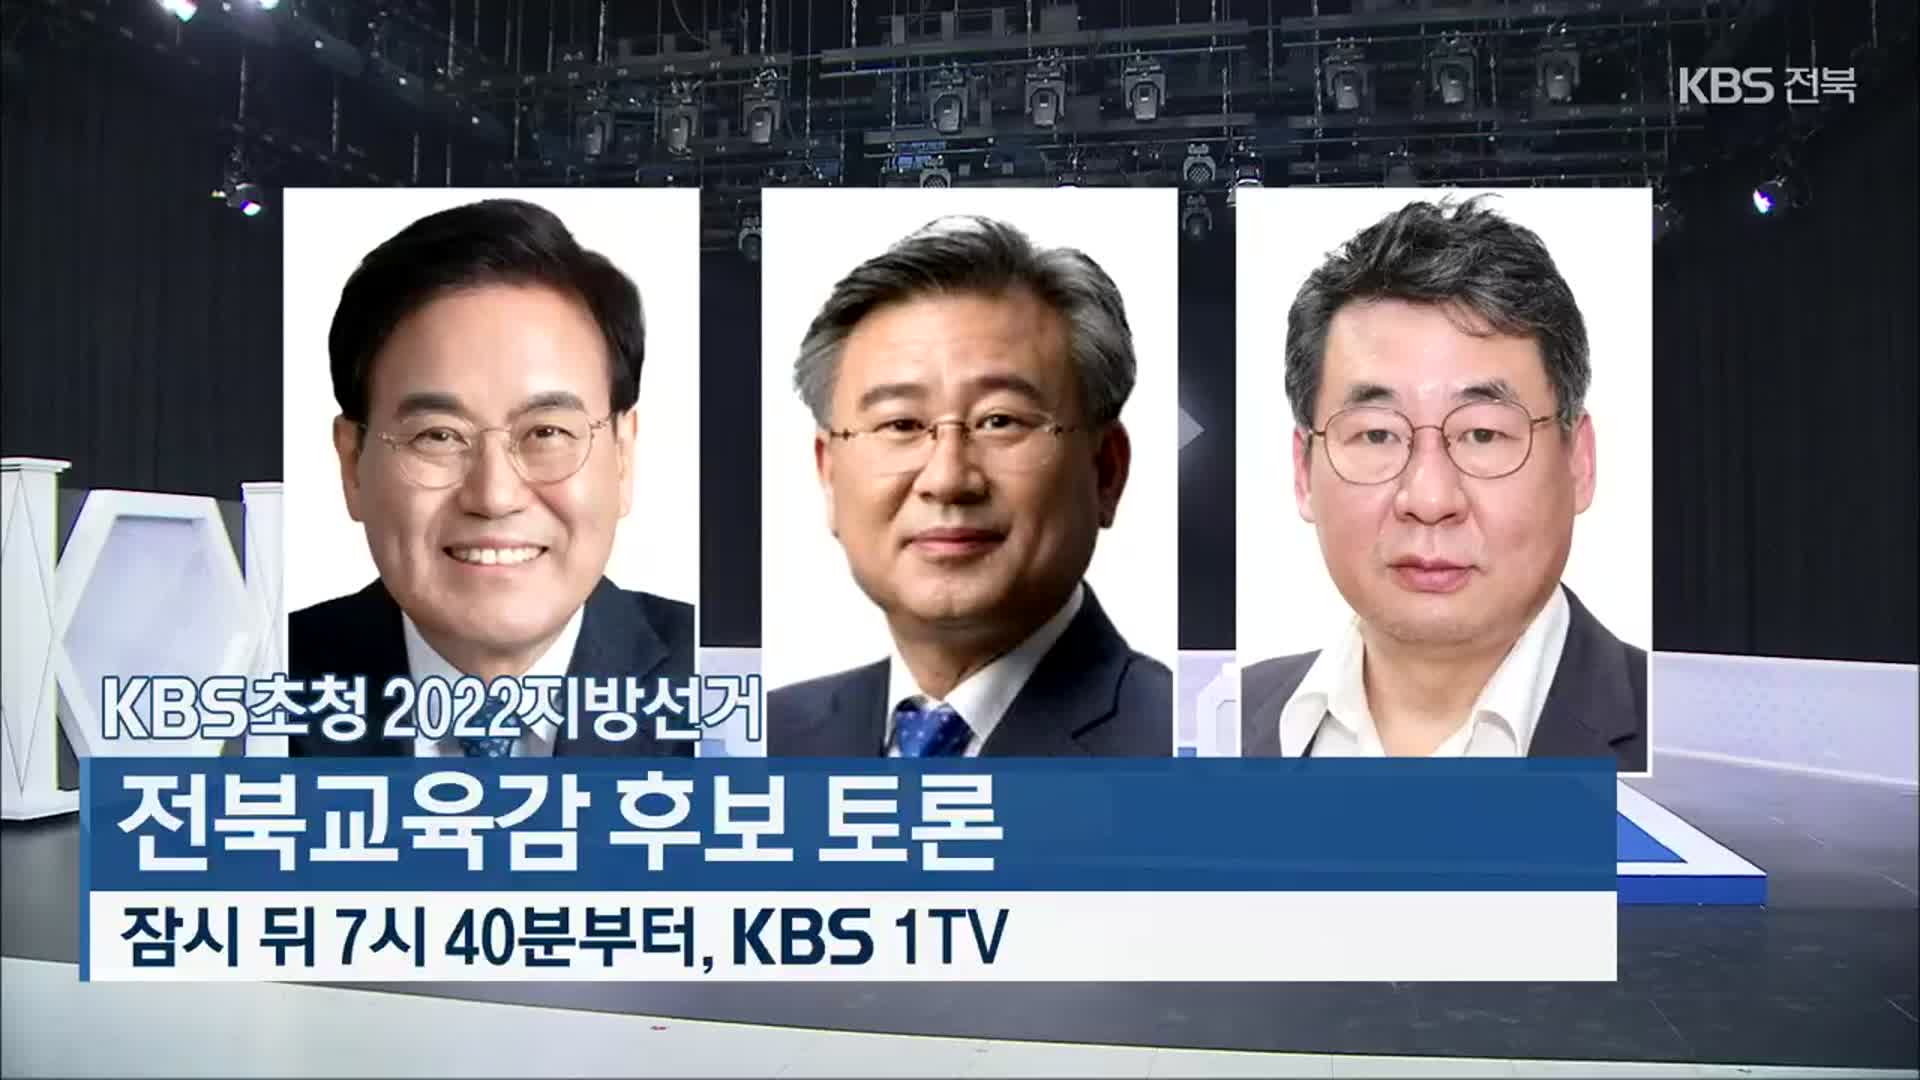 [KBS초청 2022 지방선거] 전북교육감 후보 토론 잠시 뒤 7시 40분 방송